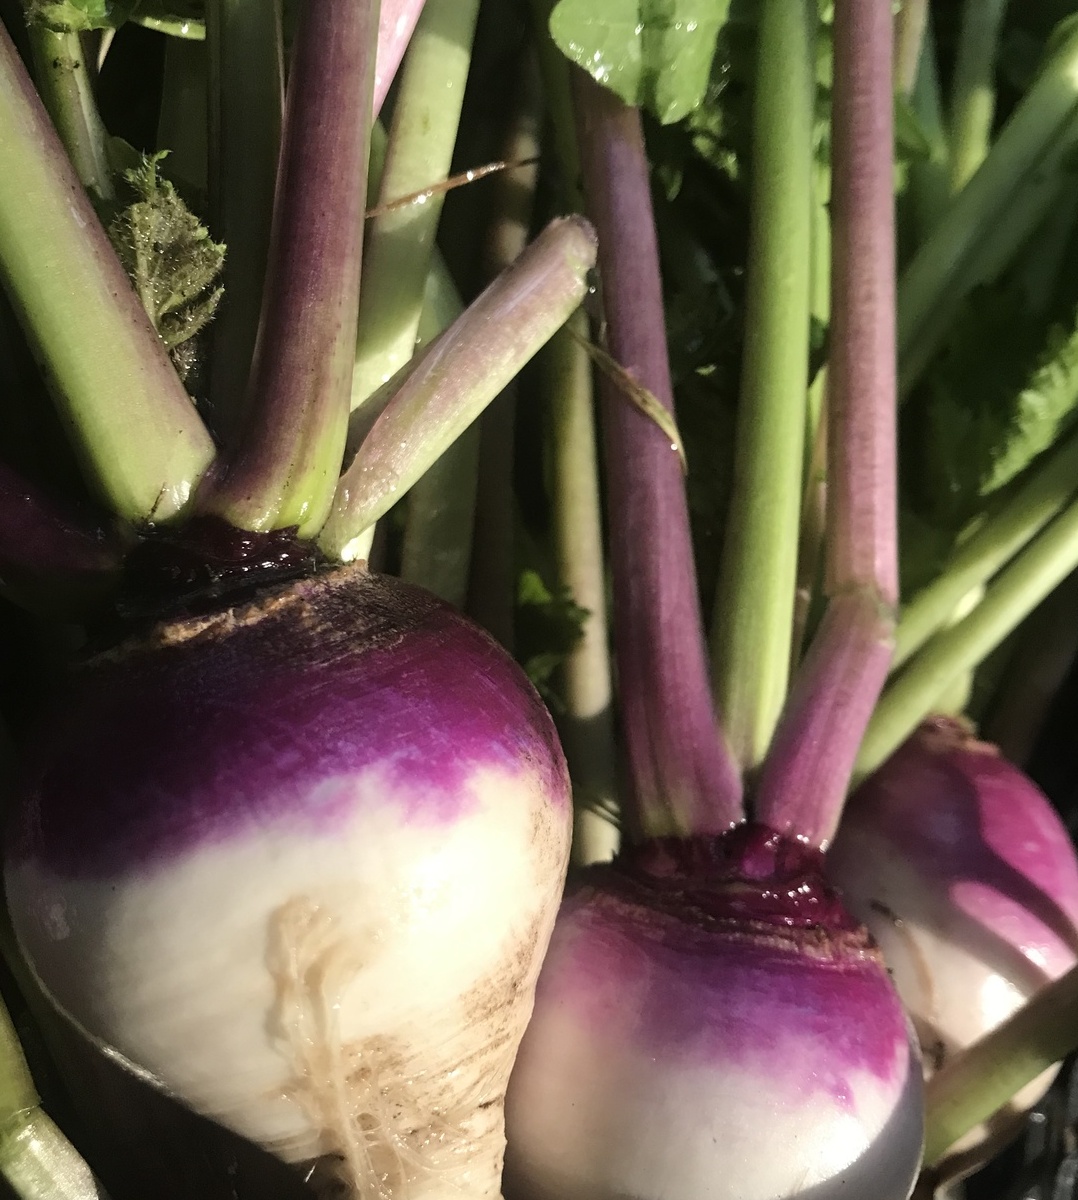 Purple top turnips with greens